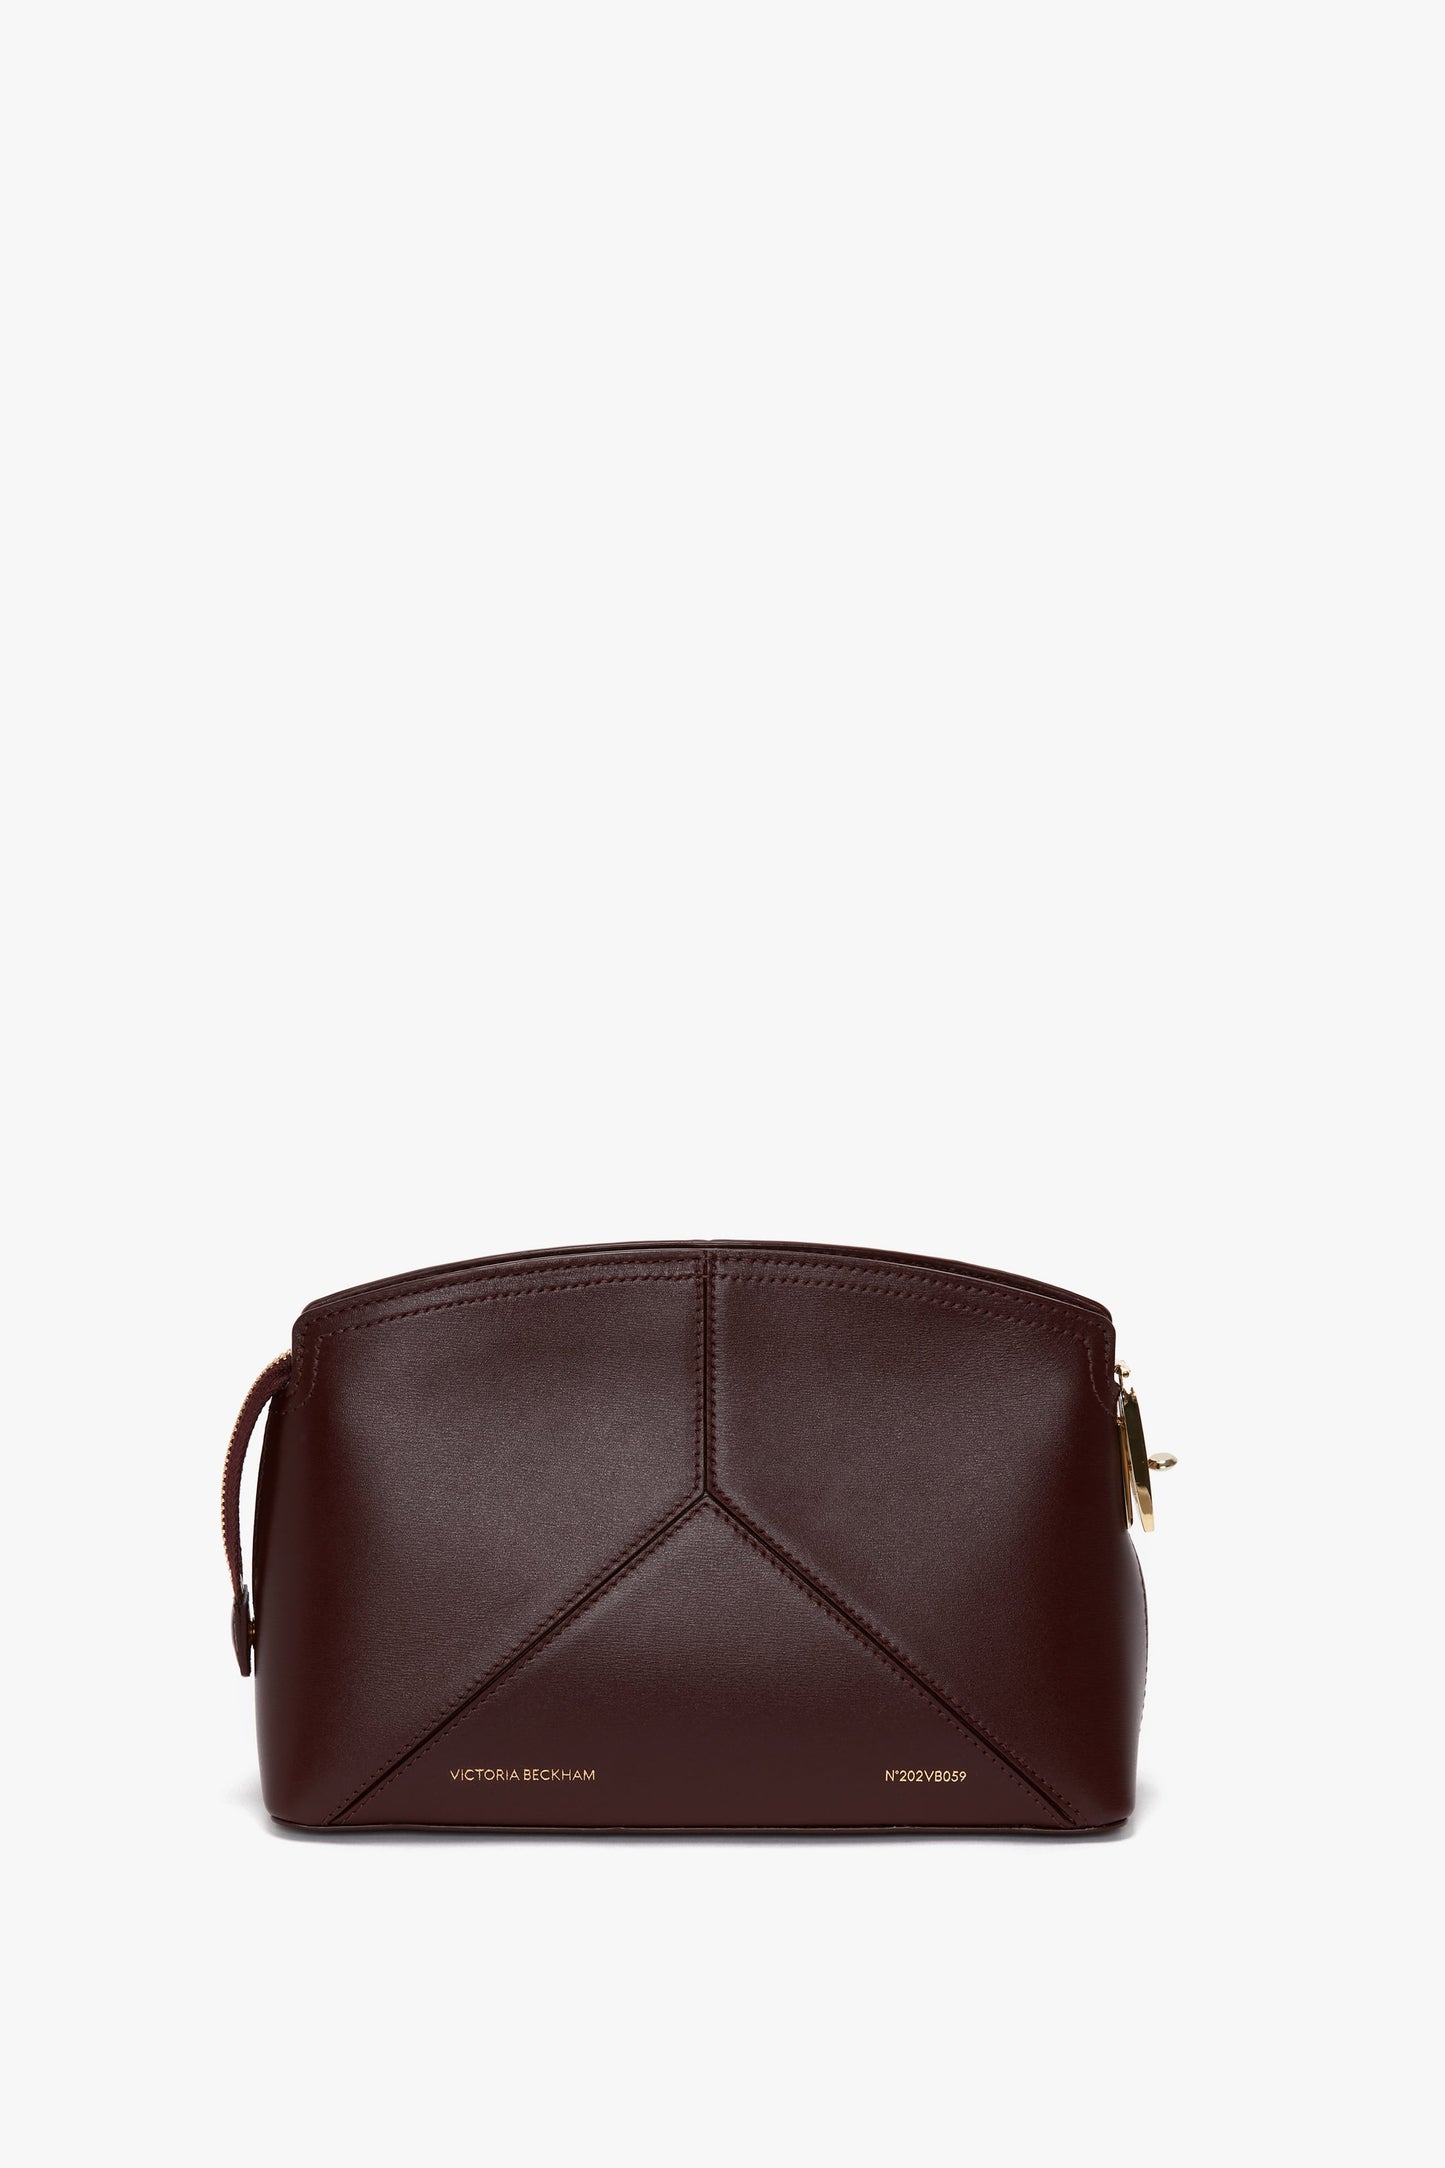 A Victoria Crossbody Bag In Burgundy Leather with a geometric stitch pattern, gold zipper closure, and "Victoria Beckham" branding.